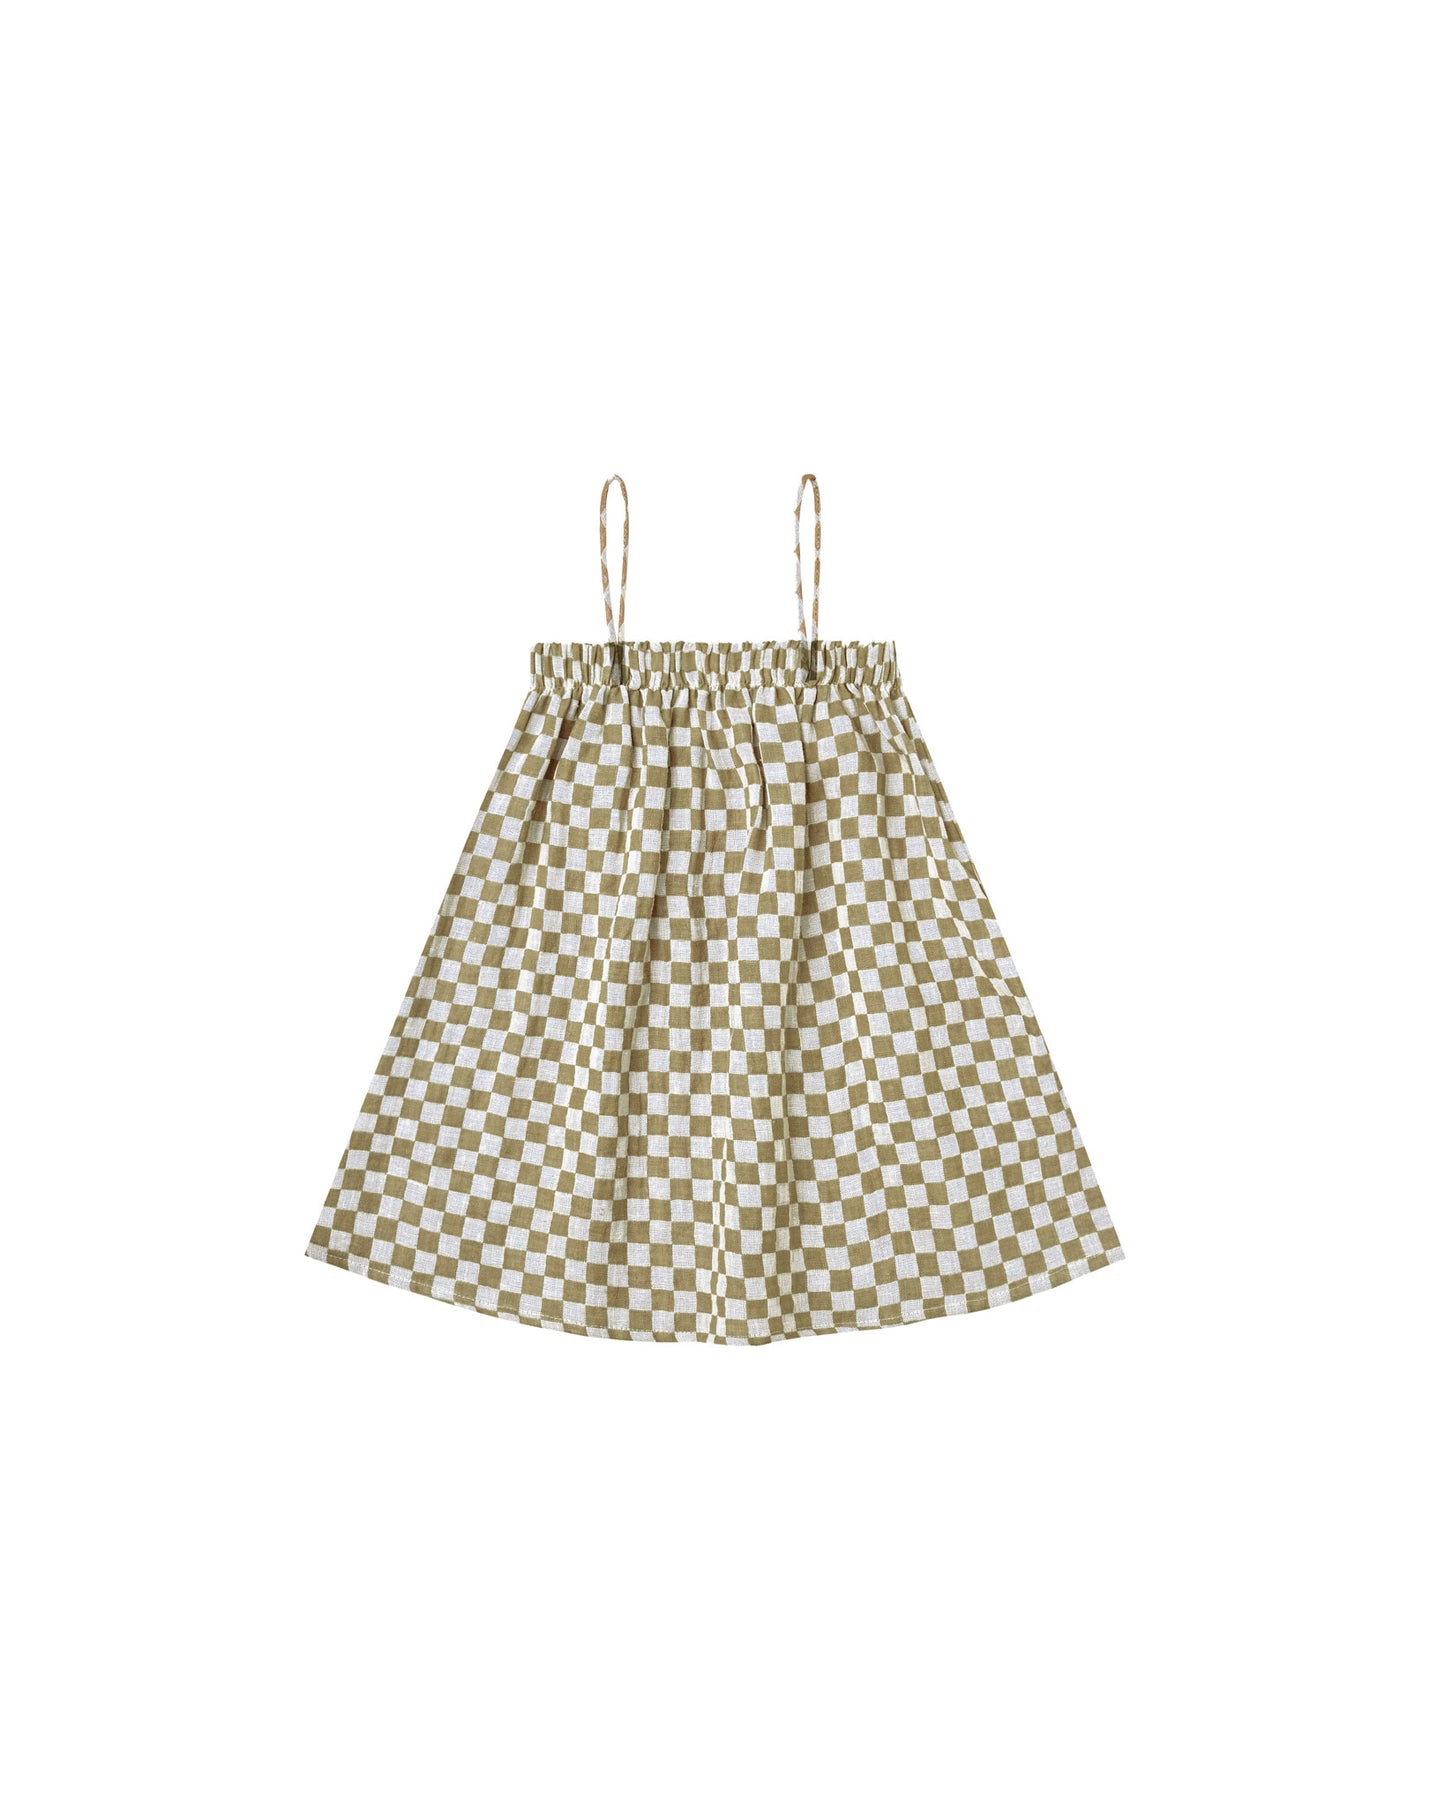 Rylee + Cru - Sahara Mini Dress - Olive Check